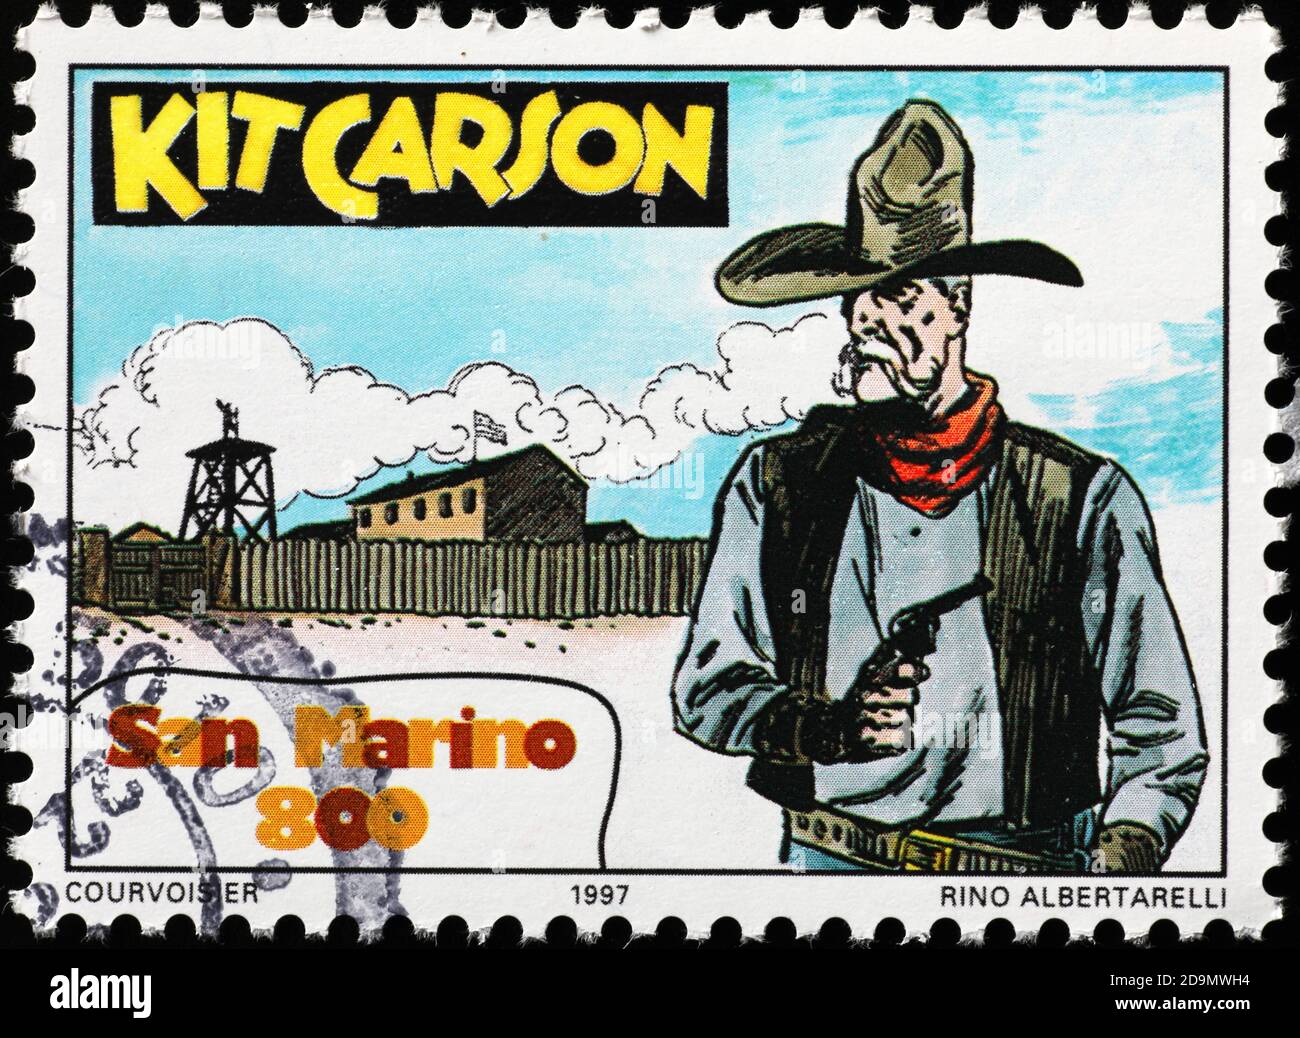 Old italian cartoon Kit Carson on postage stamp Stock Photo